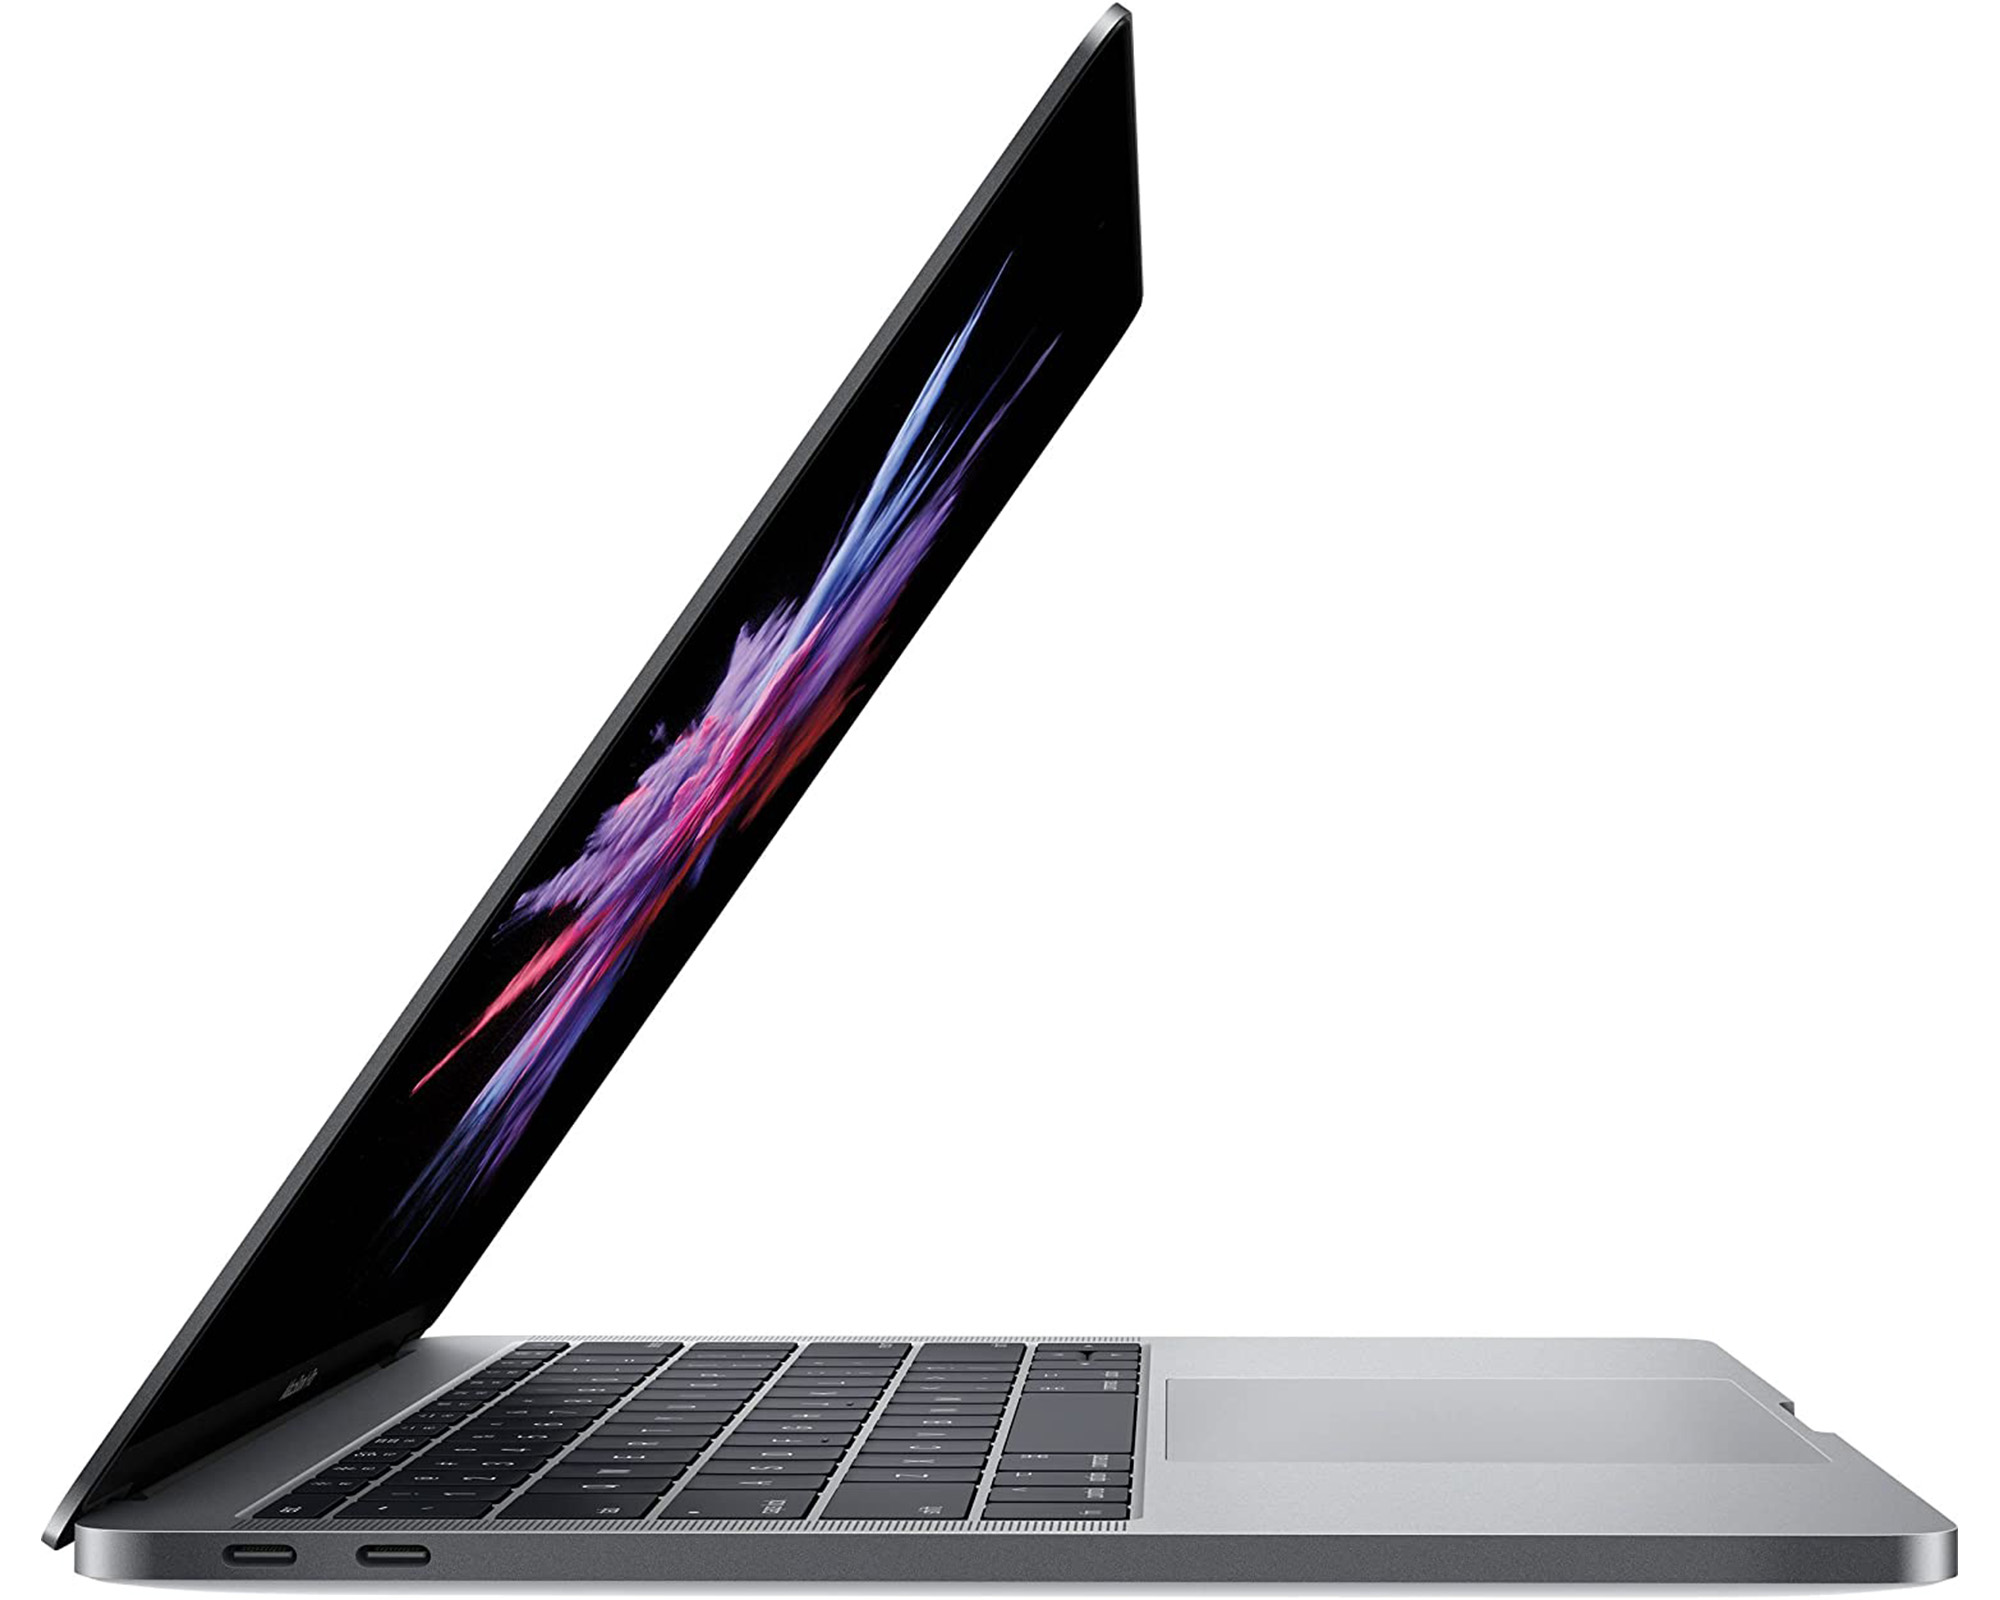 Apple MacBook Pro Laptop, 13.3\" Retina Display, Intel Core i5, 256GB SSD, Mac OS Sierra, MPXT2B/A. Pre-Owned: Like New - image 4 of 5